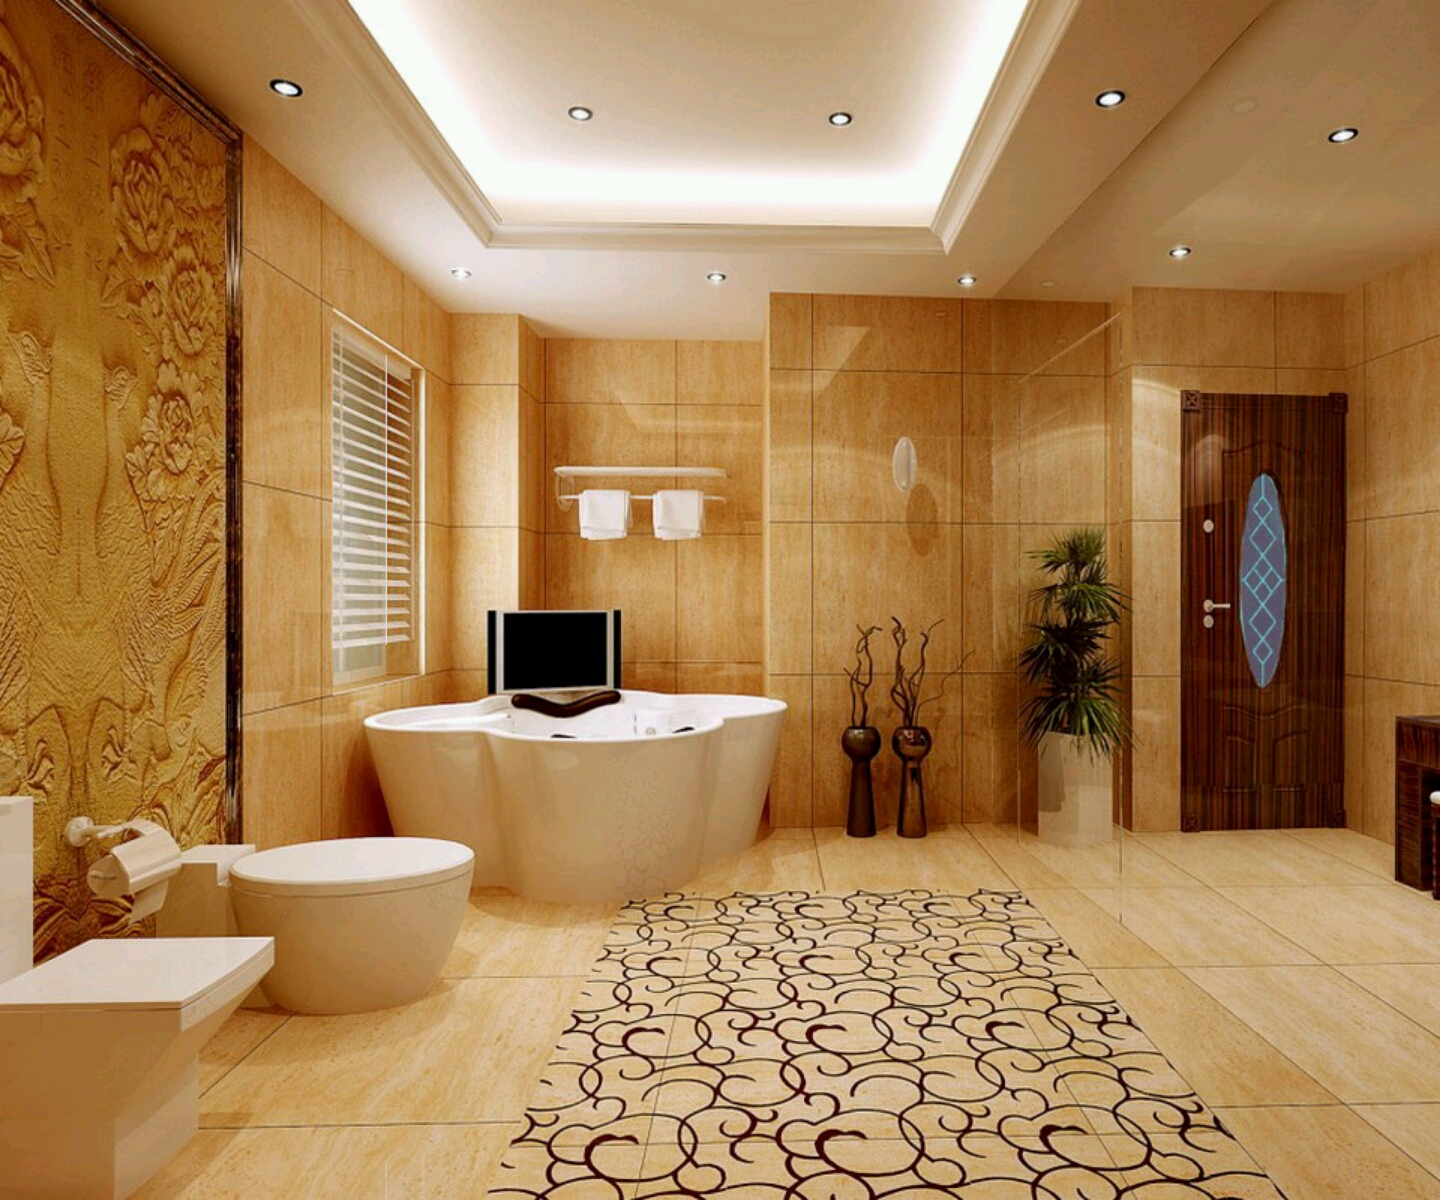 http://4.bp.blogspot.com/-h5b0t2QK45Q/UPQvX4C-haI/AAAAAAAAhBc/cTJXSiXDlMQ/s1600/Modern+bathrooms+best+designs+ideas..jpg